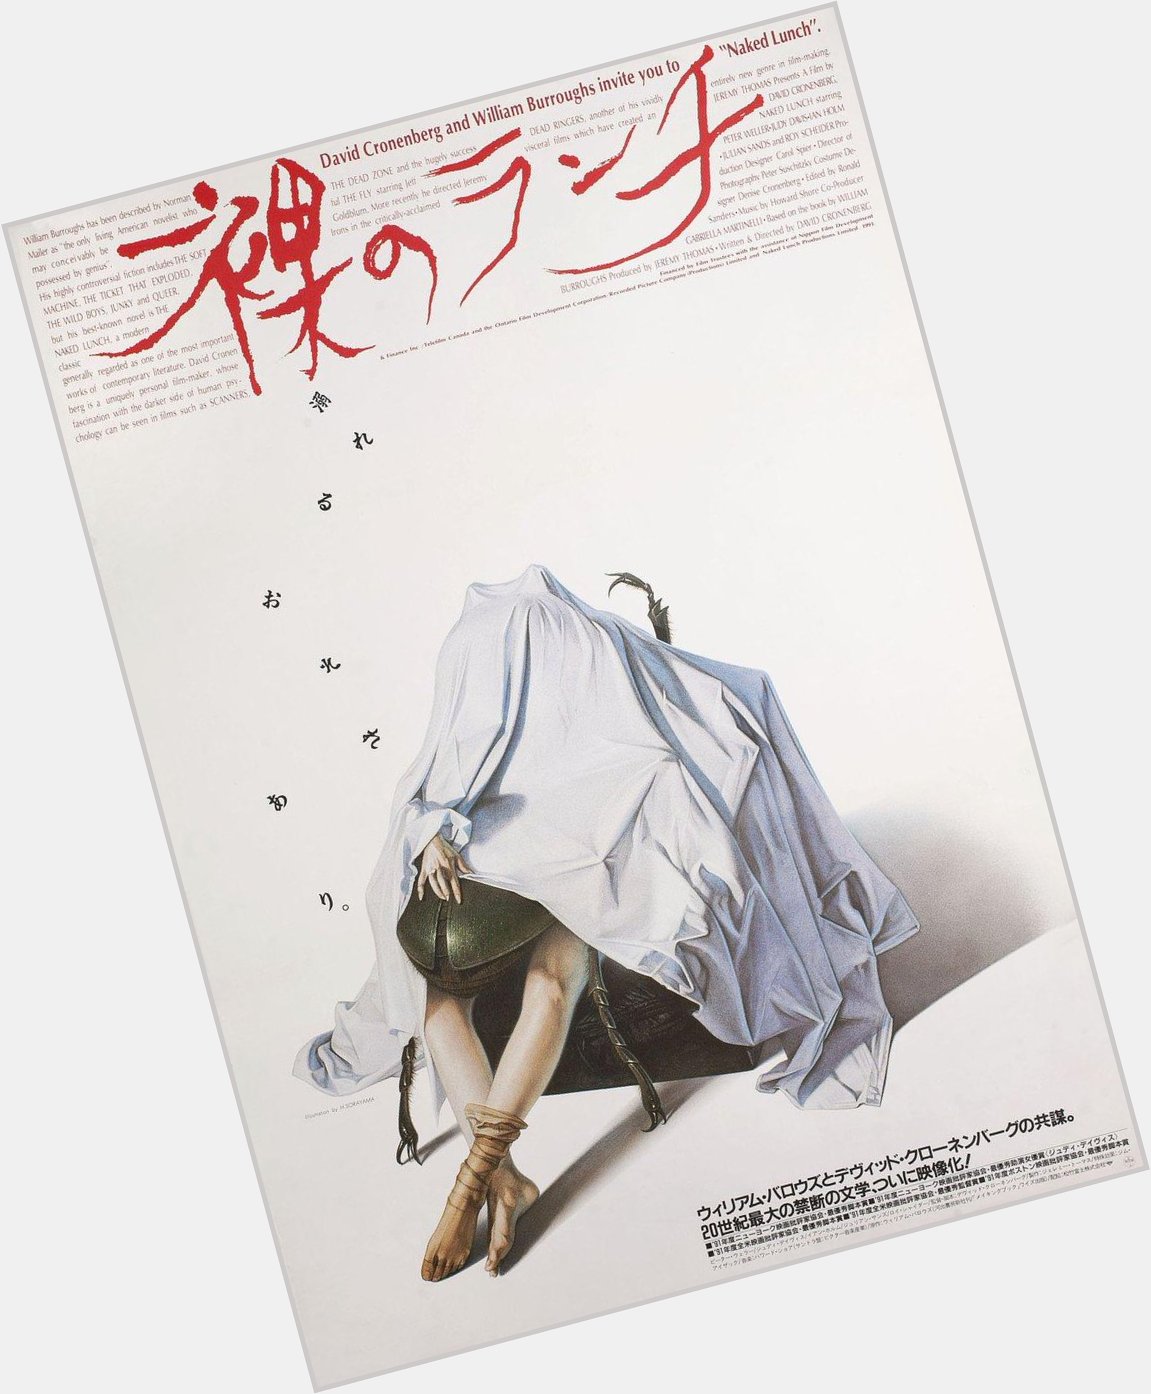 Naked Lunch
1991 Japanese B2 Poster
Hajime Sorayama

Happy 76th Birthday to David Cronenberg, the master. 